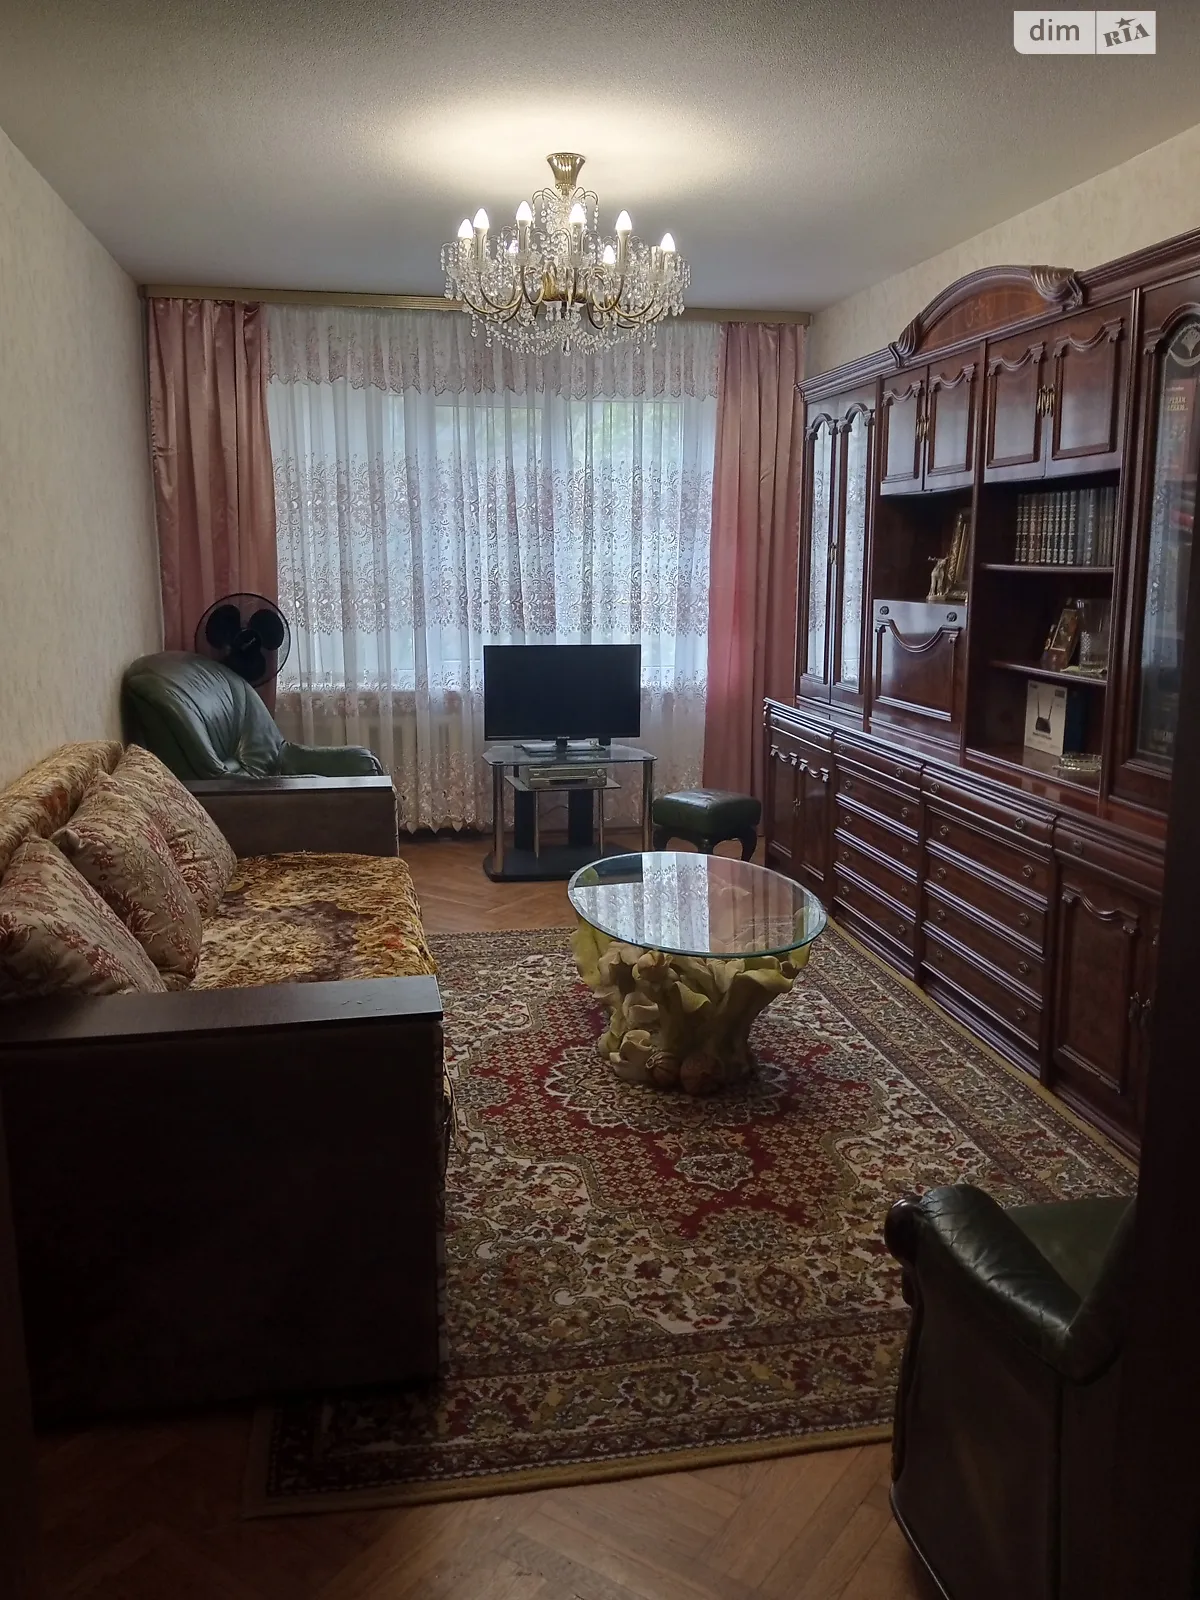 Сдается в аренду 3-комнатная квартира 70 кв. м в Киеве, ул. Александра Архипенко, 8В - фото 1